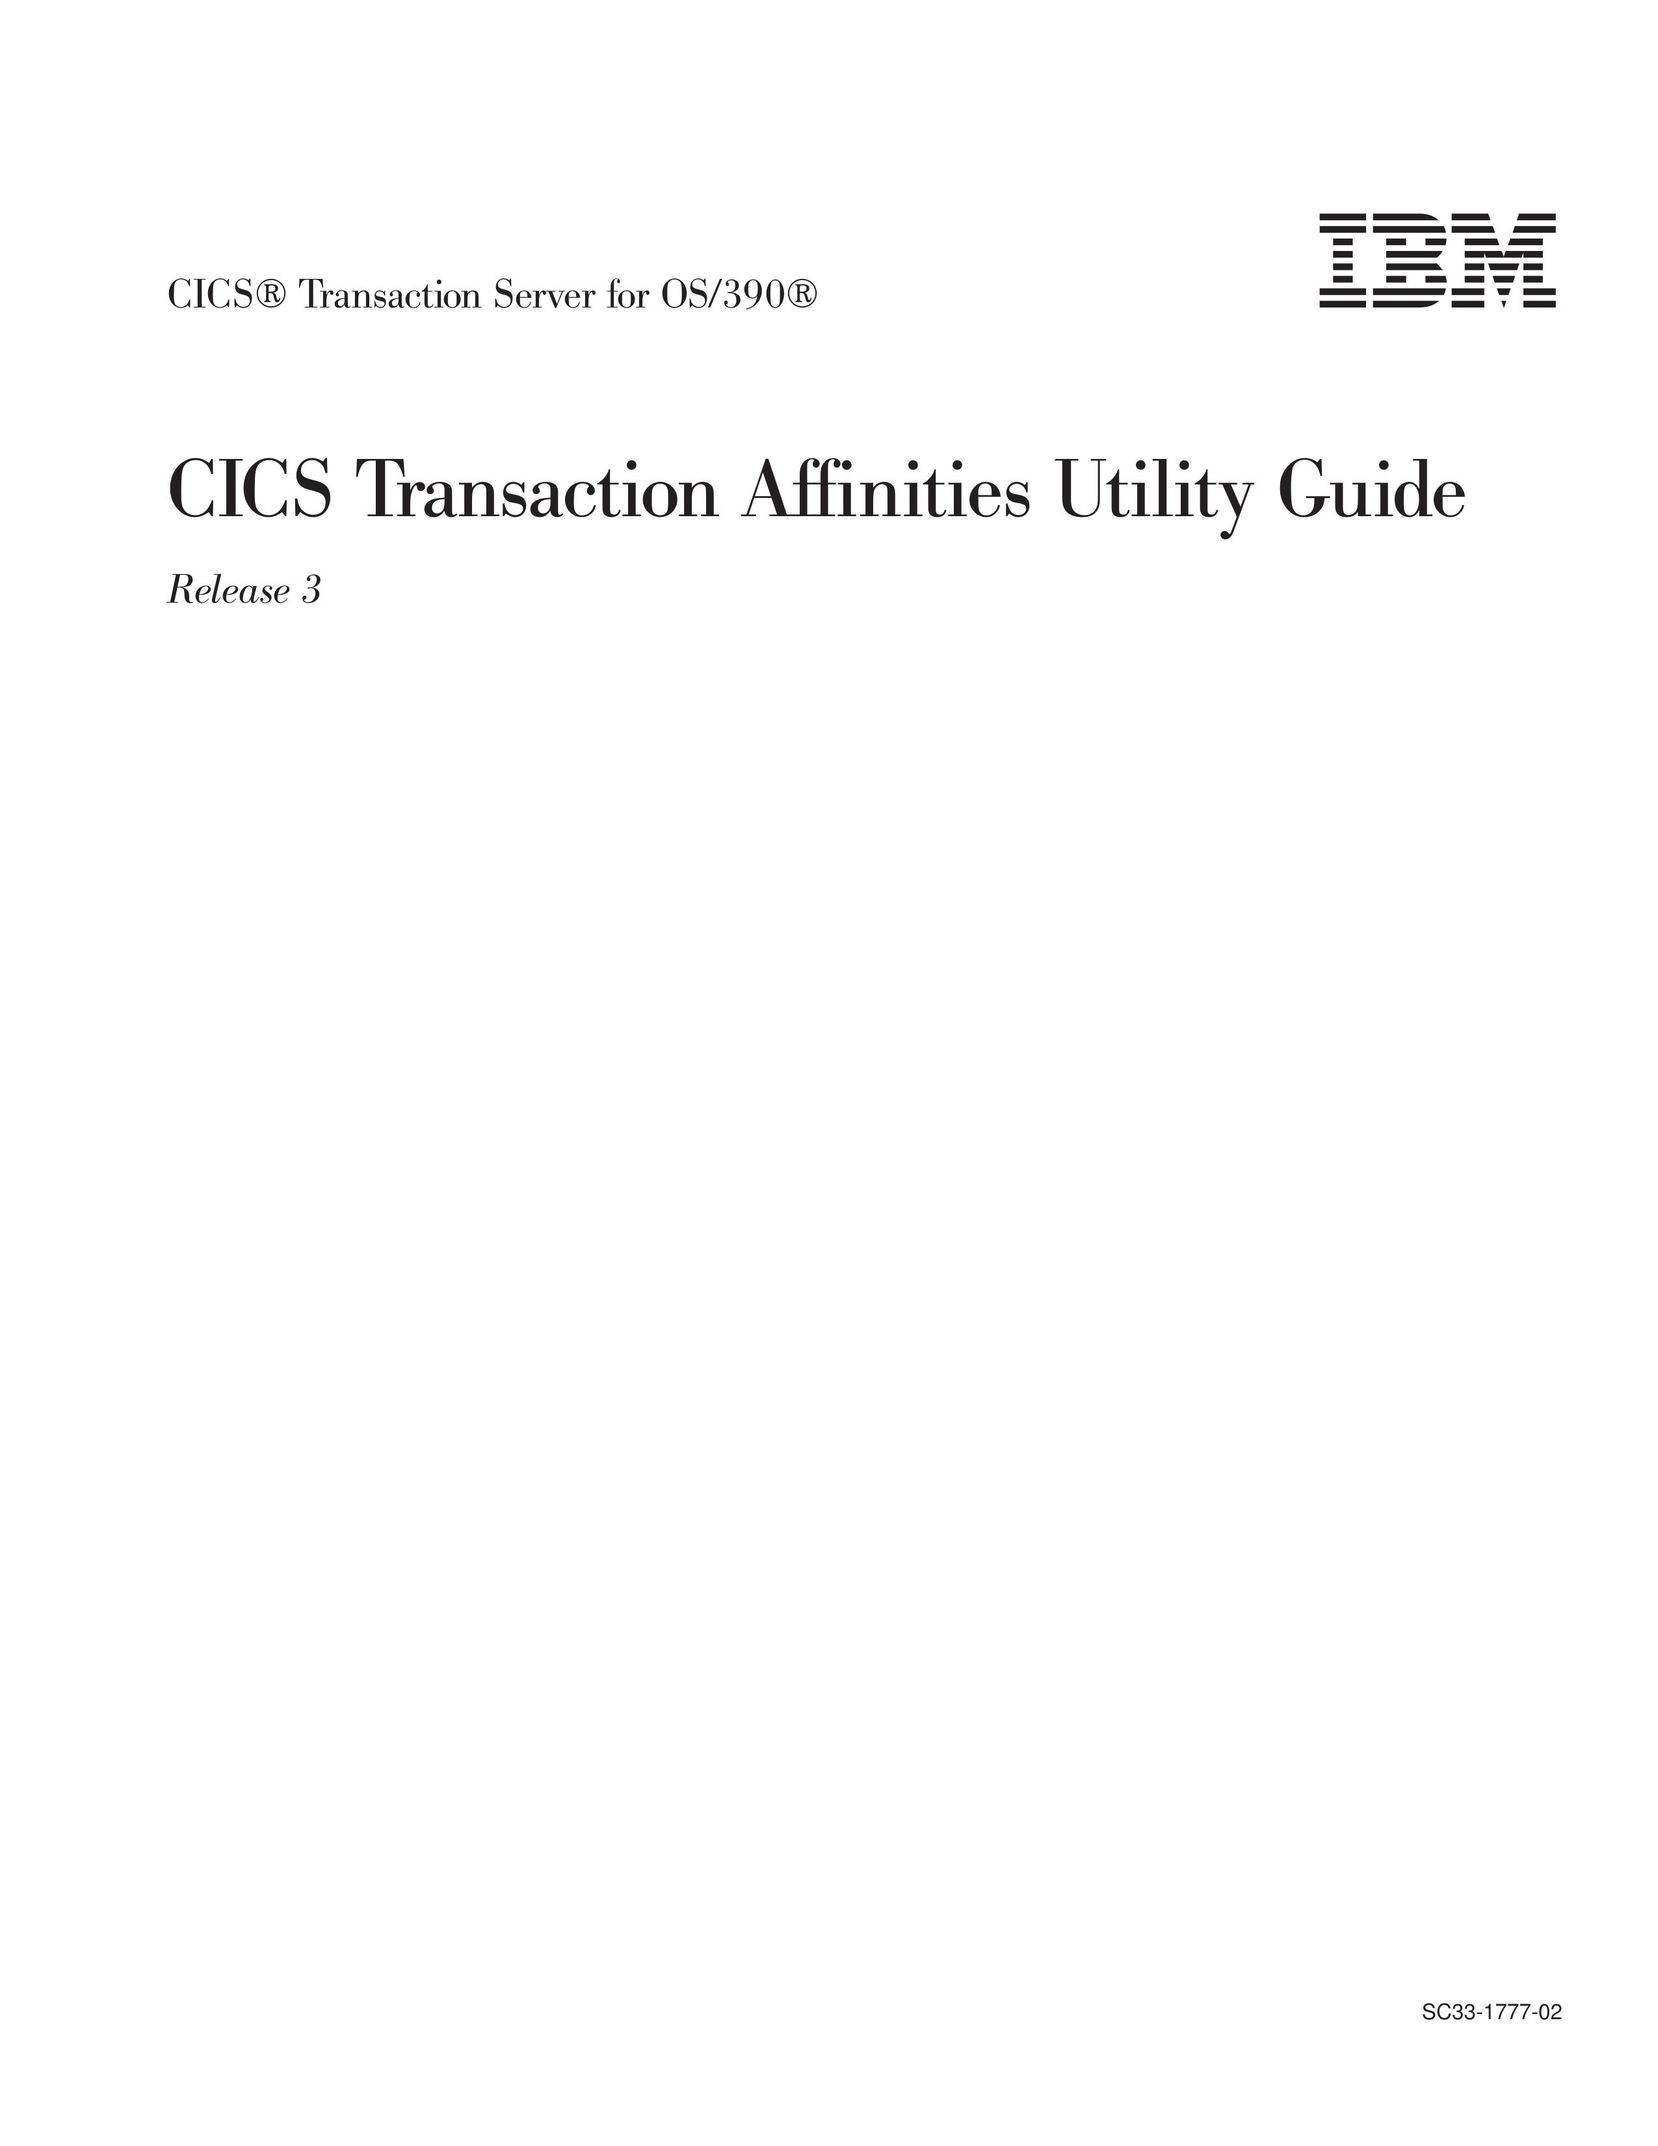 IBM OS Credit Card Machine User Manual